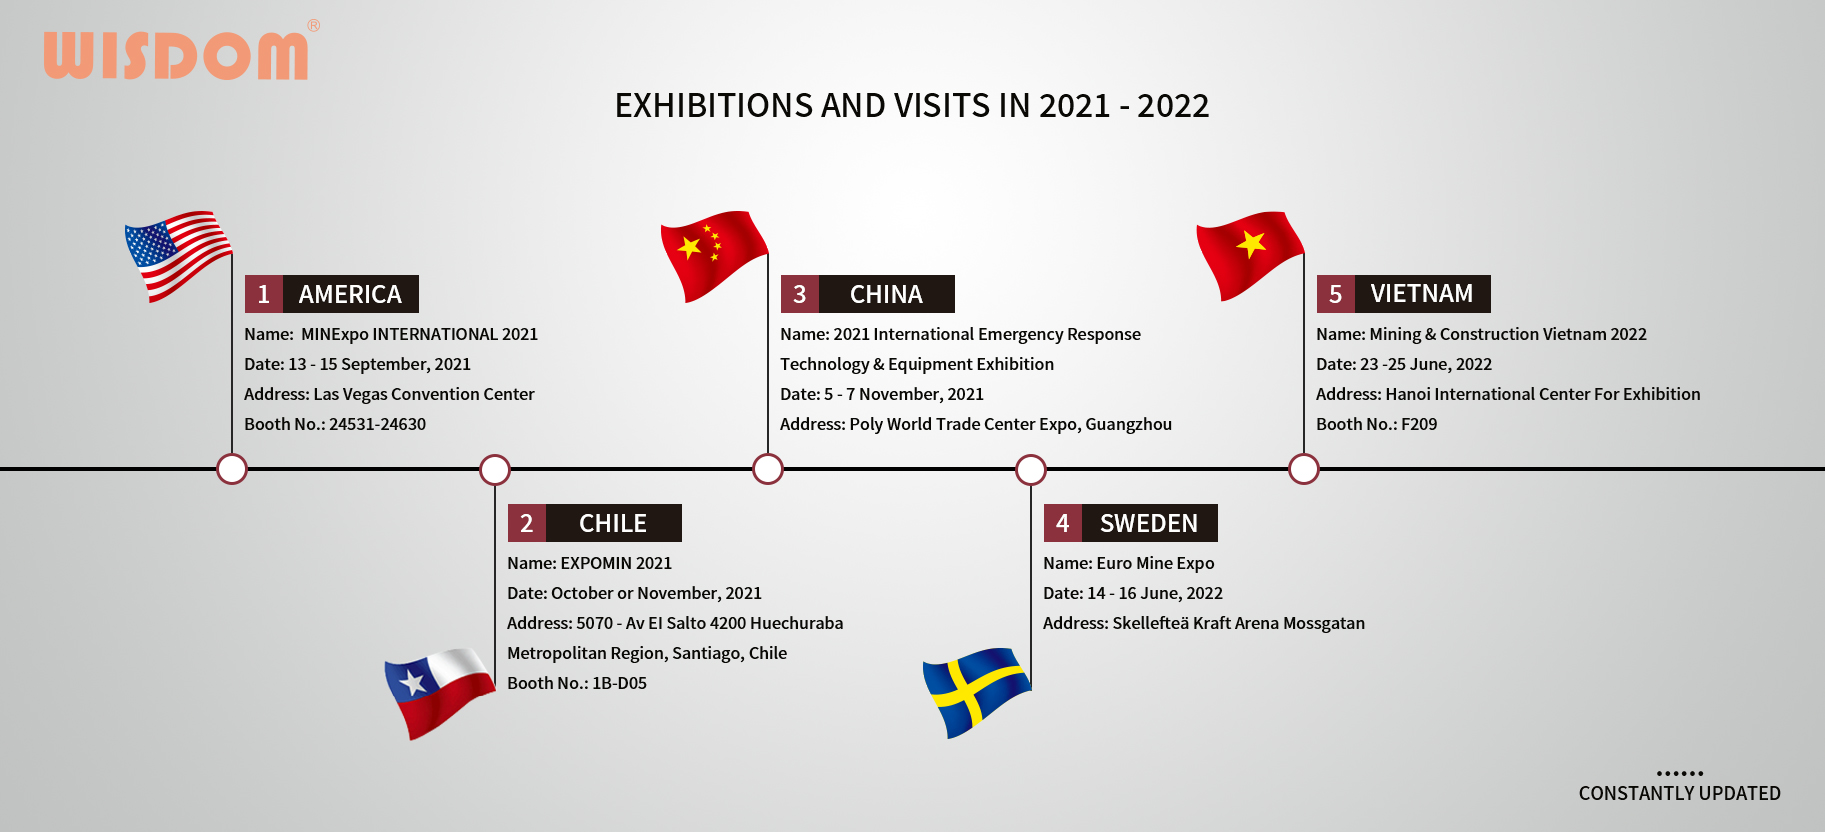 WISDOM exhibitions in 2020